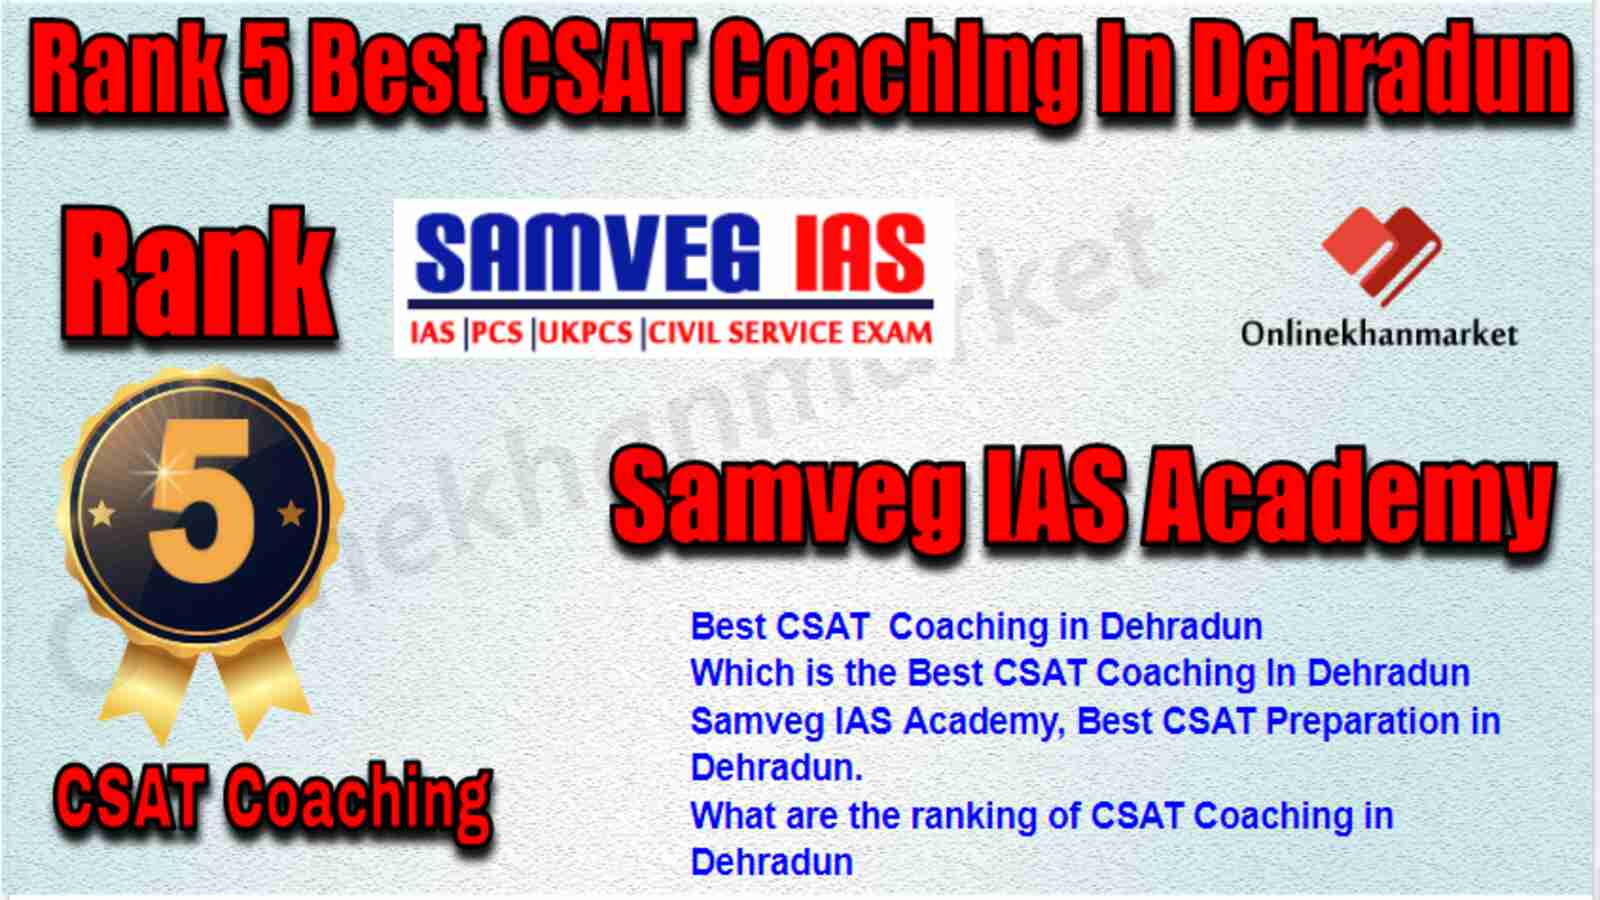 Rank 5 Best CSAT Coaching in Dehradun